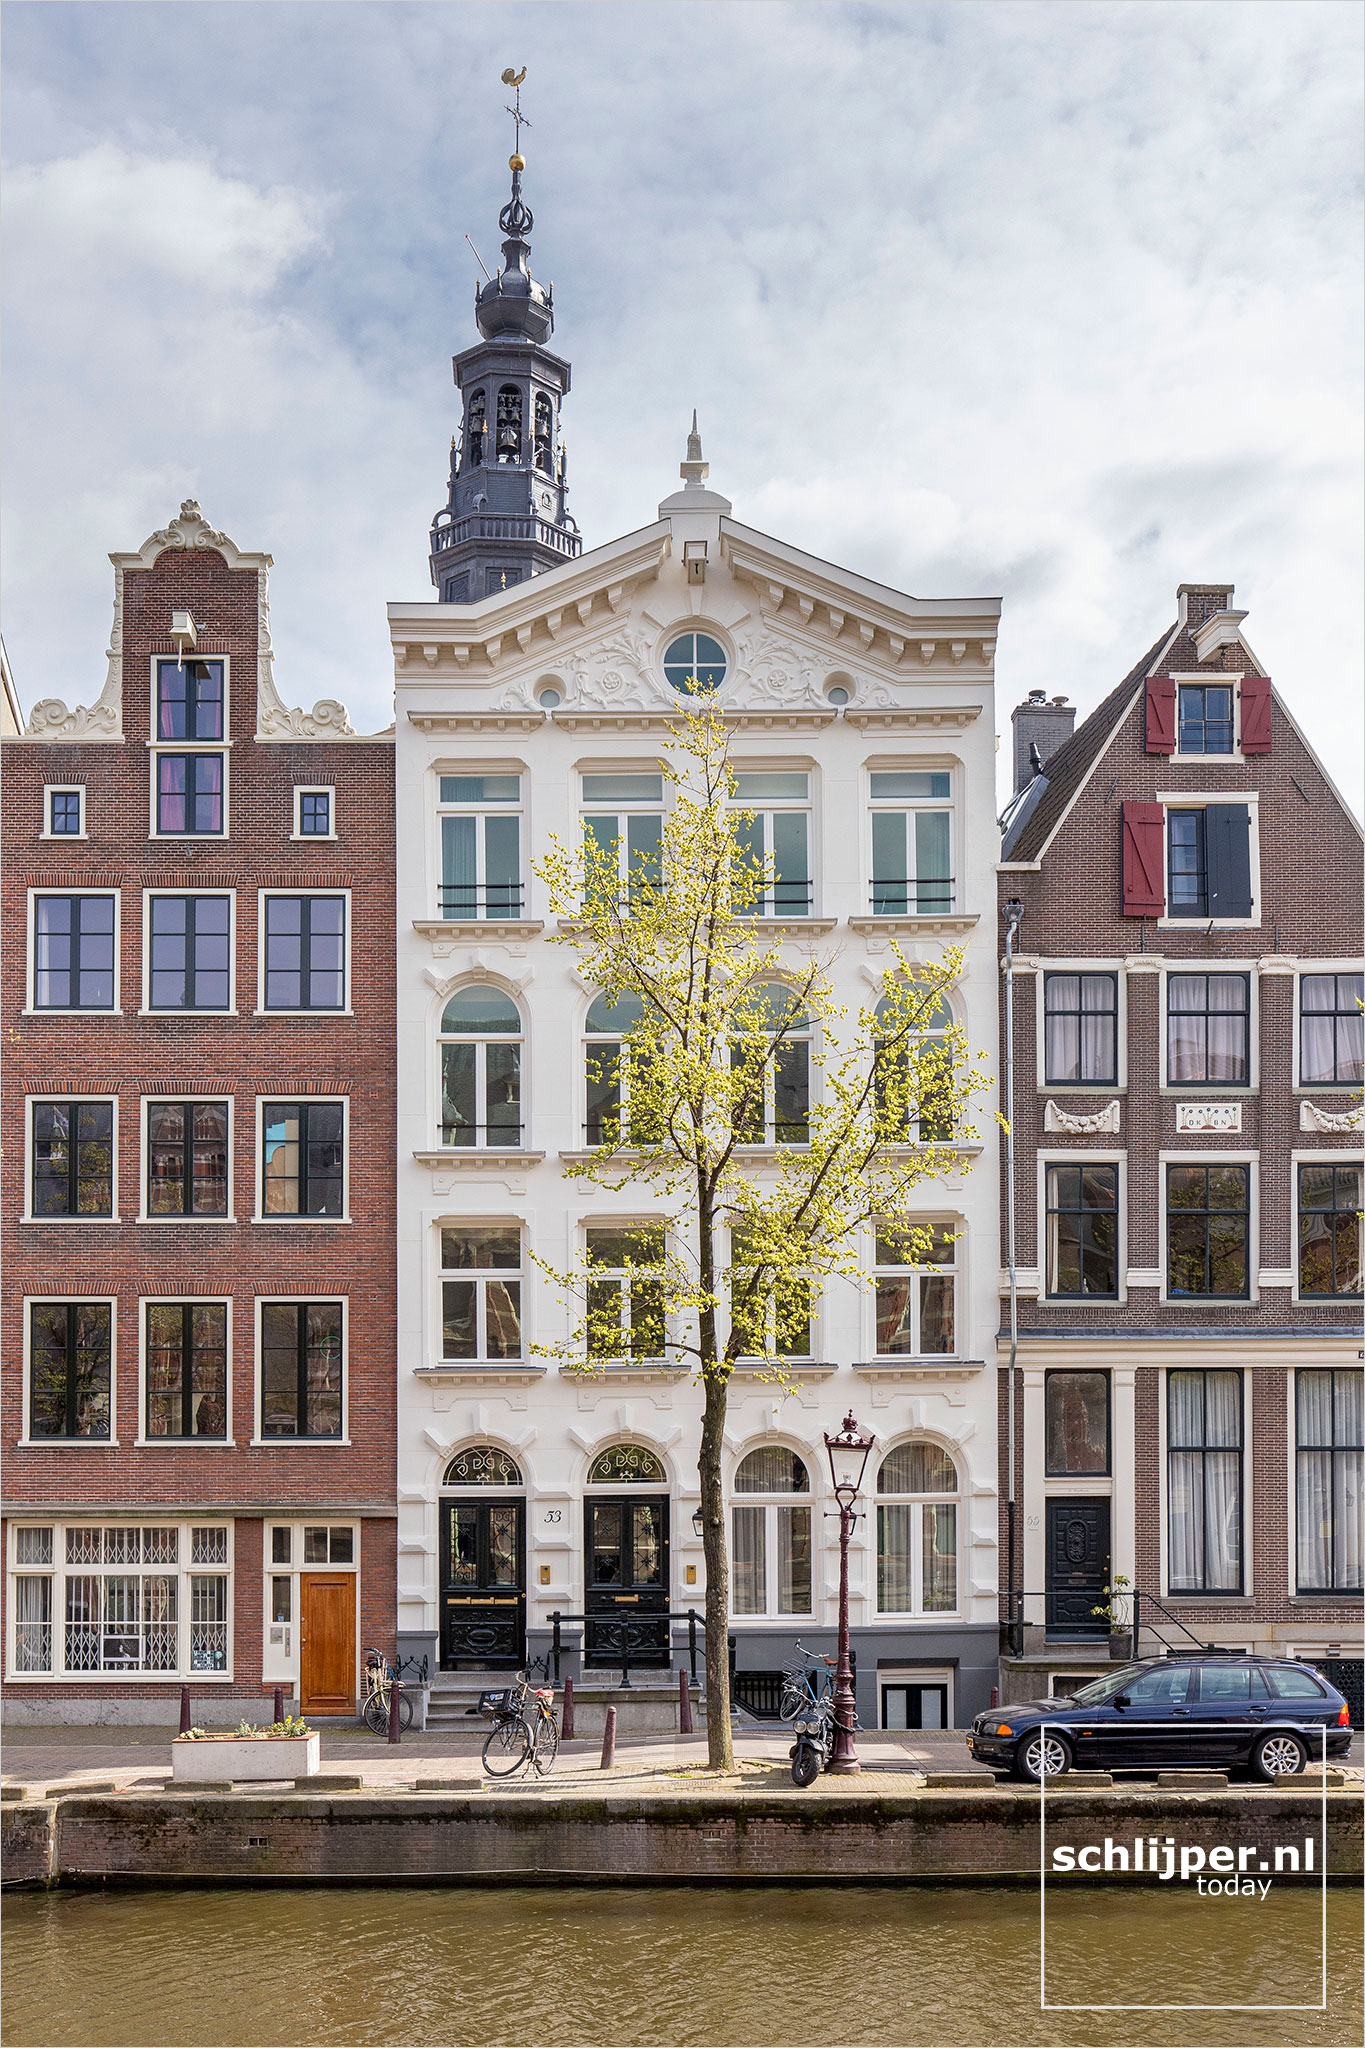 The Netherlands, Amsterdam, 8 april 2021